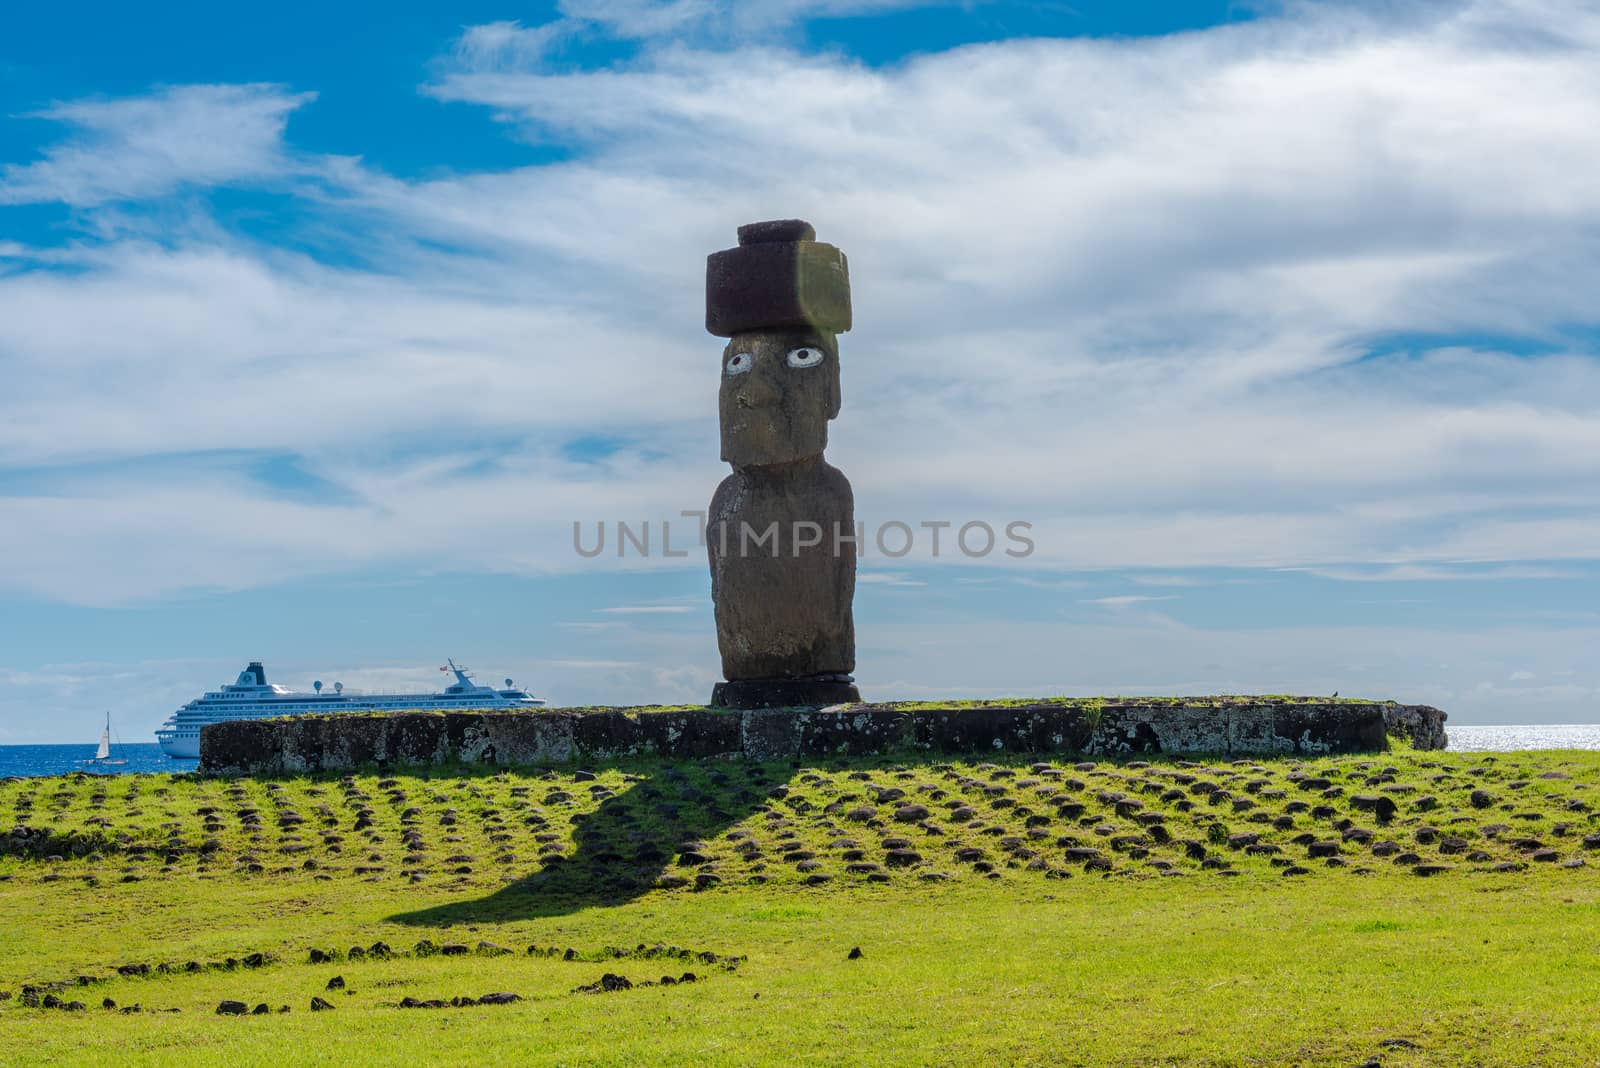 Moai on Altar by jfbenning